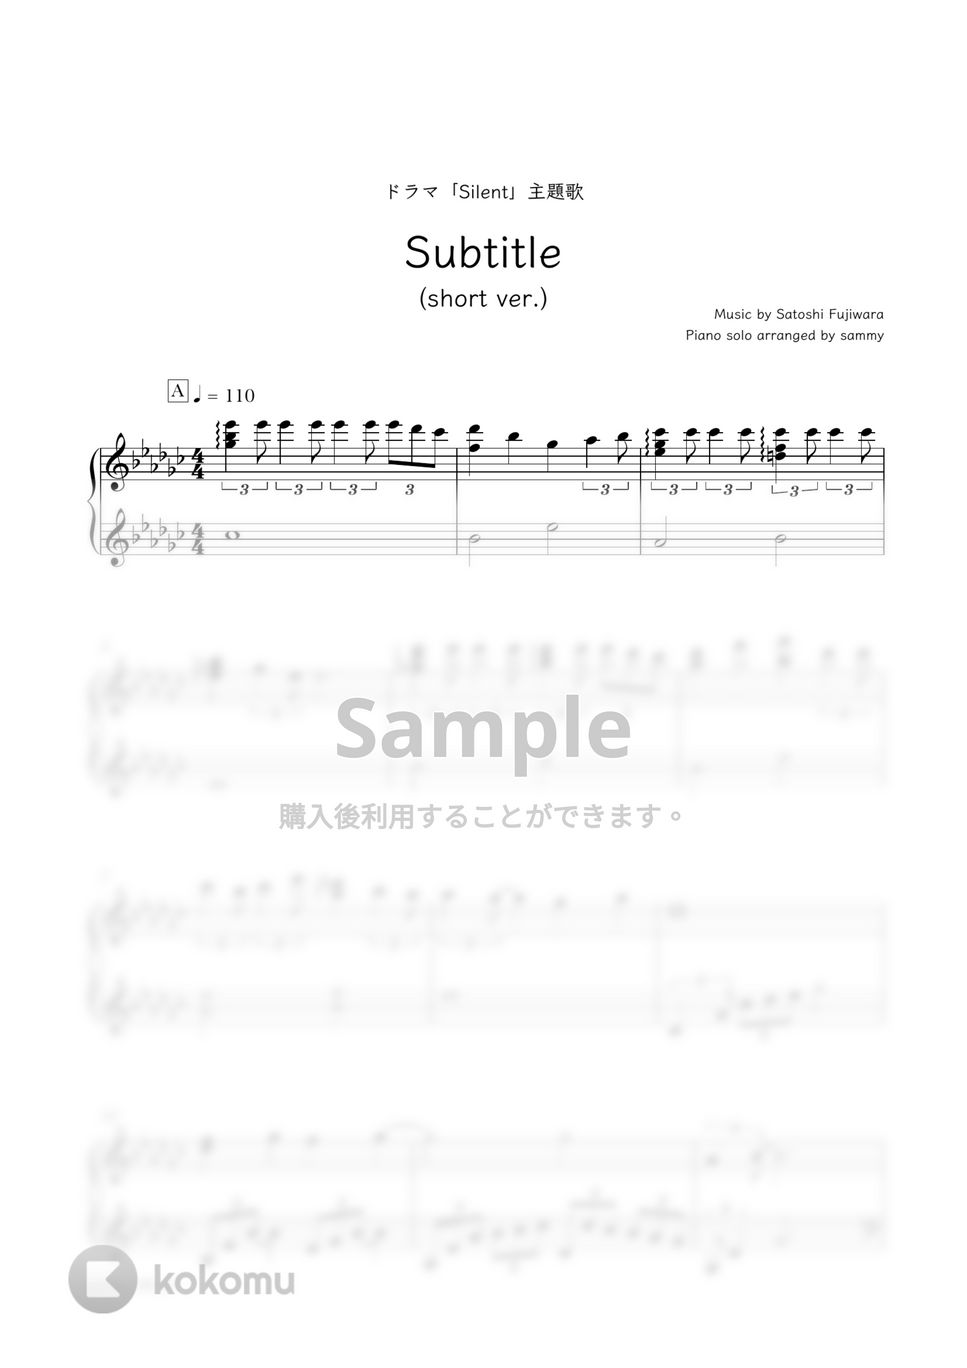 Official髭男dism - Subtitle (ドラマ劇中で流れたピアノver.) by sammy